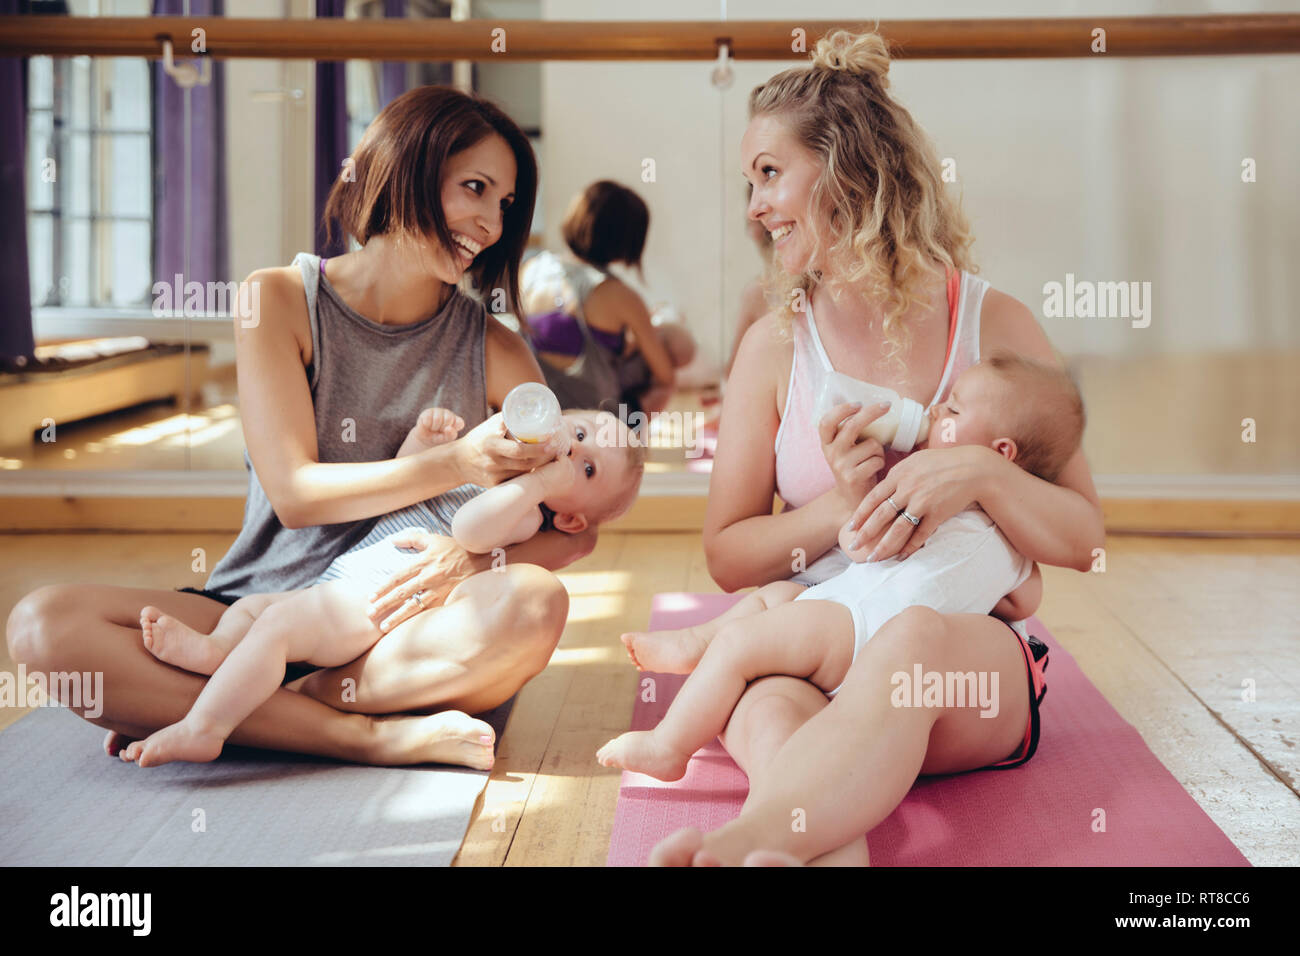 Dos madres el biberón a sus bebés en la sala de ejercicio Foto de stock